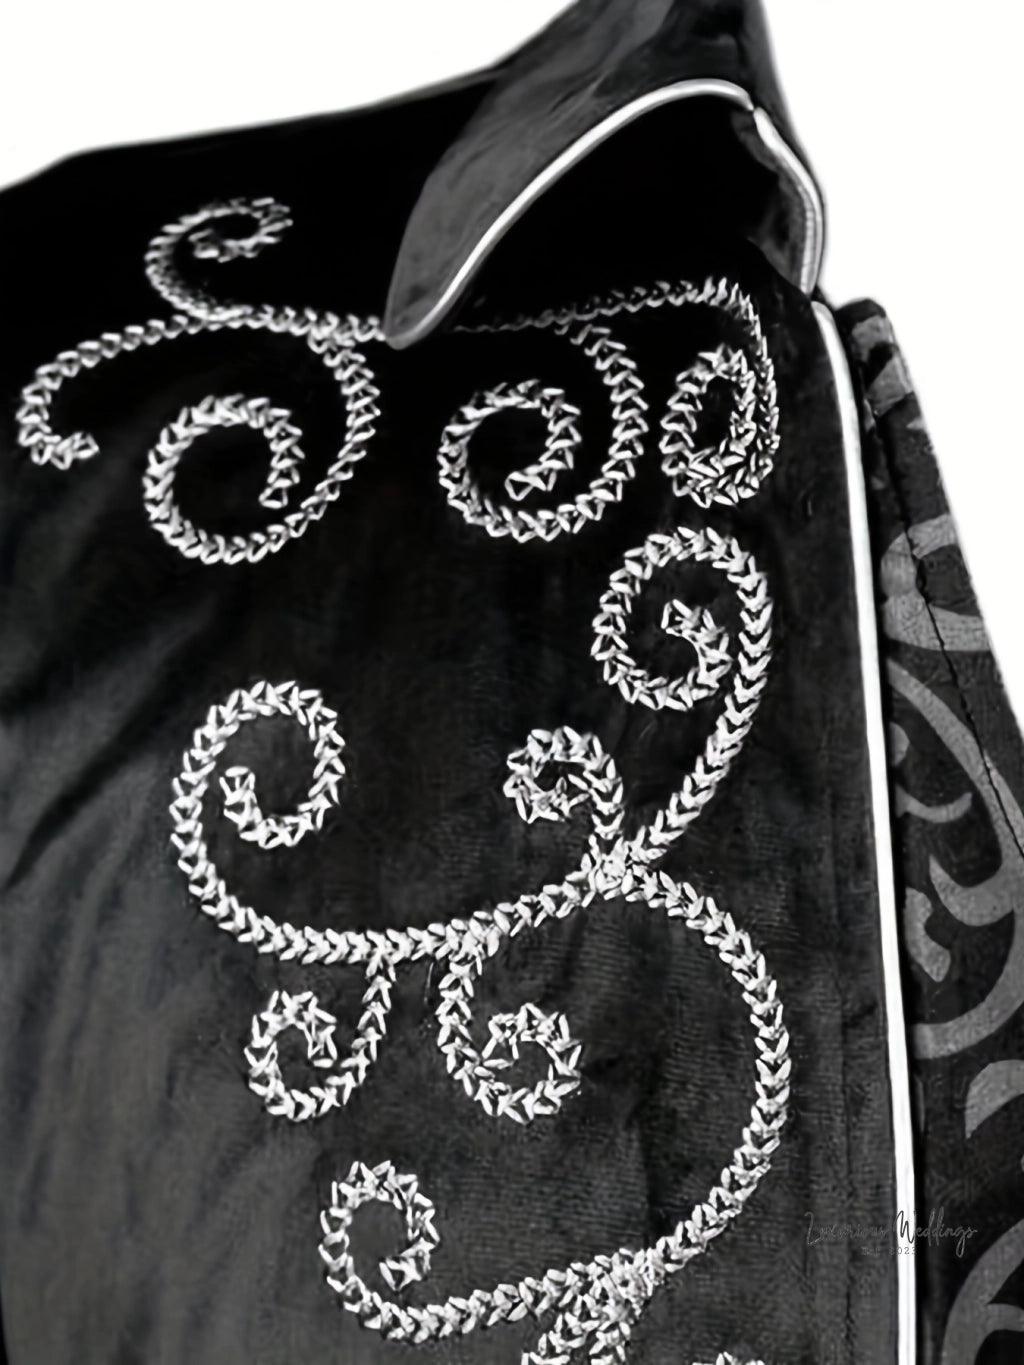 Steampunk Gothic Embroidered Victorian Jacket - Men's Renaissance Costume - Luxurious Weddings